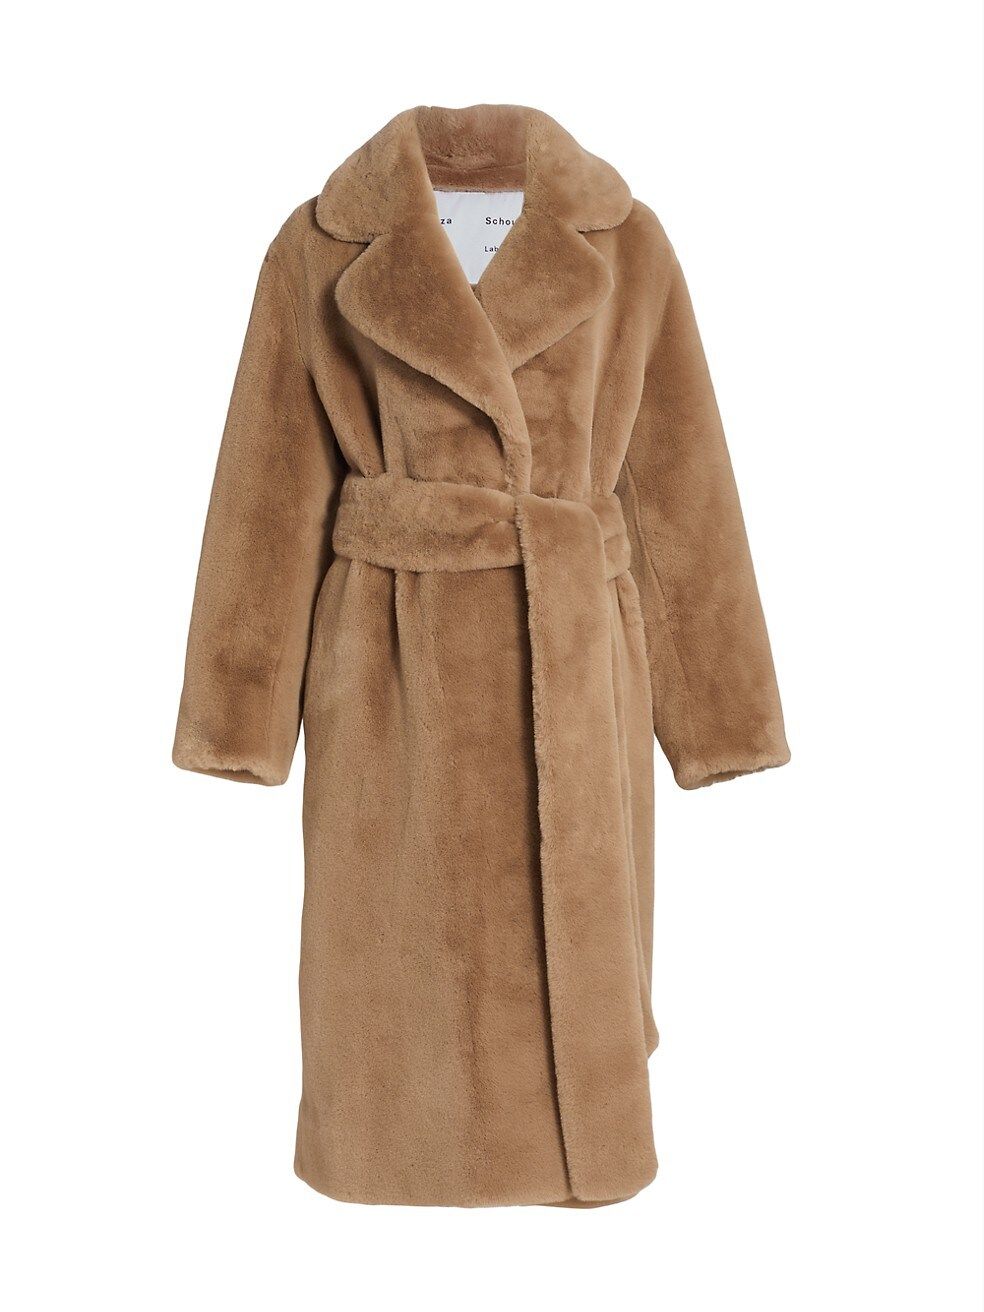 Proenza Schouler White Label Faux Fur Belted Coat | Saks Fifth Avenue